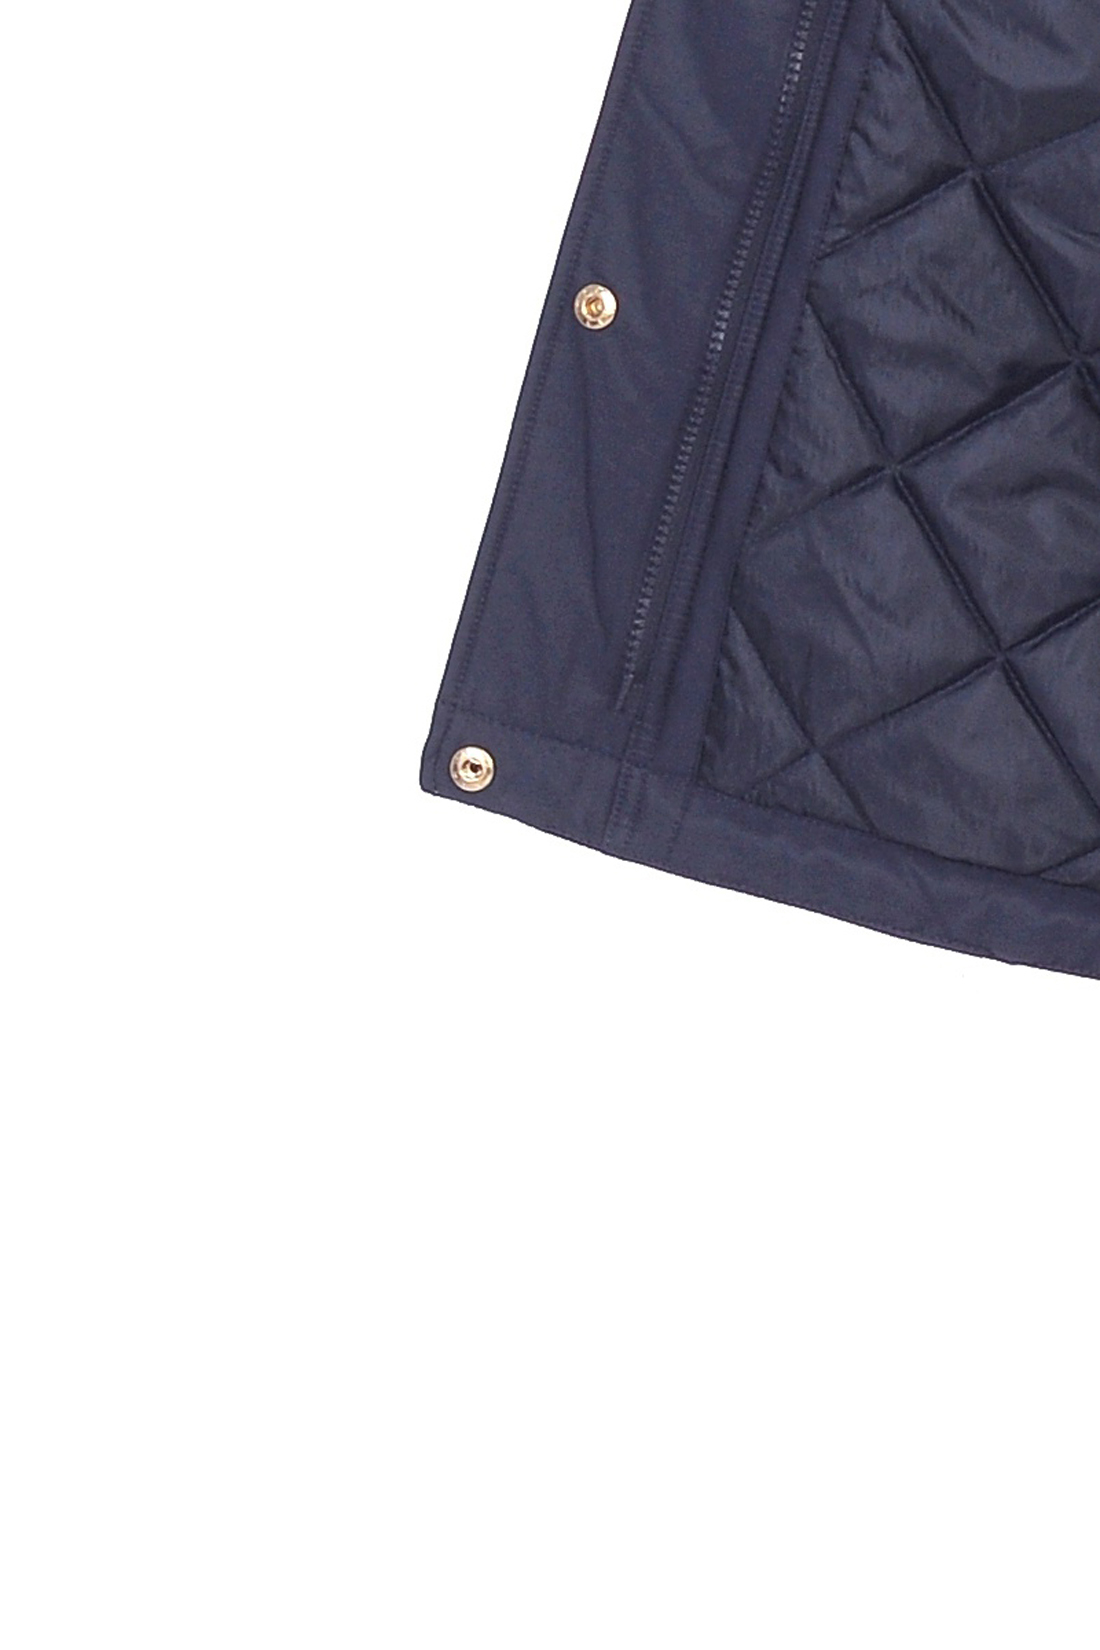 Куртка-парка с вышивкой (арт. baon B039004), размер XXL, цвет синий Куртка-парка с вышивкой (арт. baon B039004) - фото 4